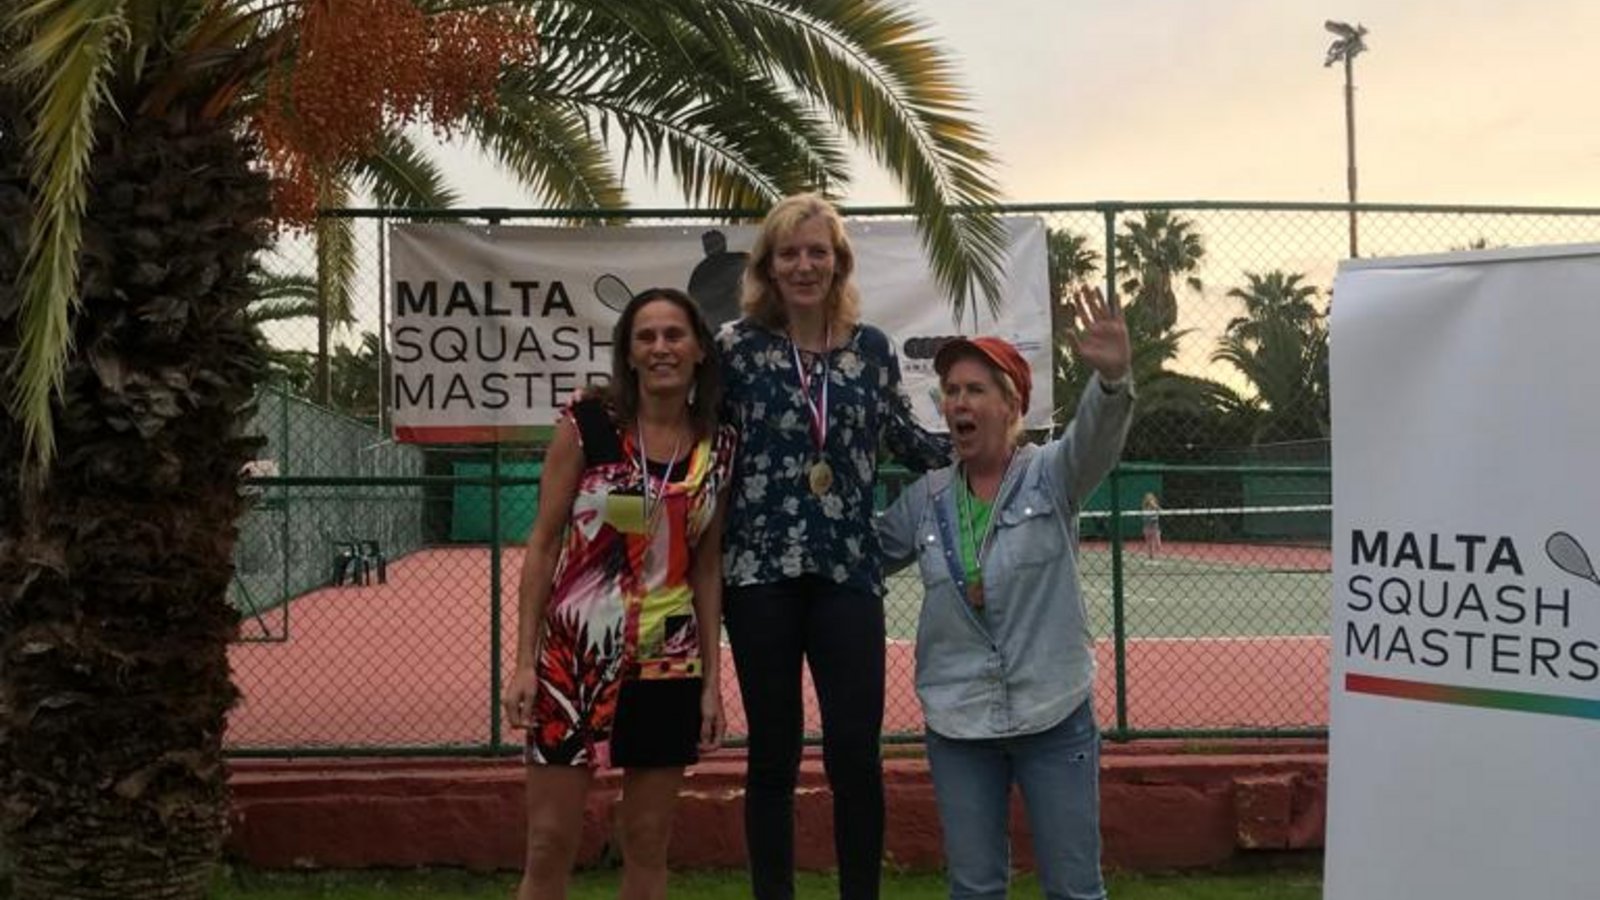 Malta Squash Masters 2021